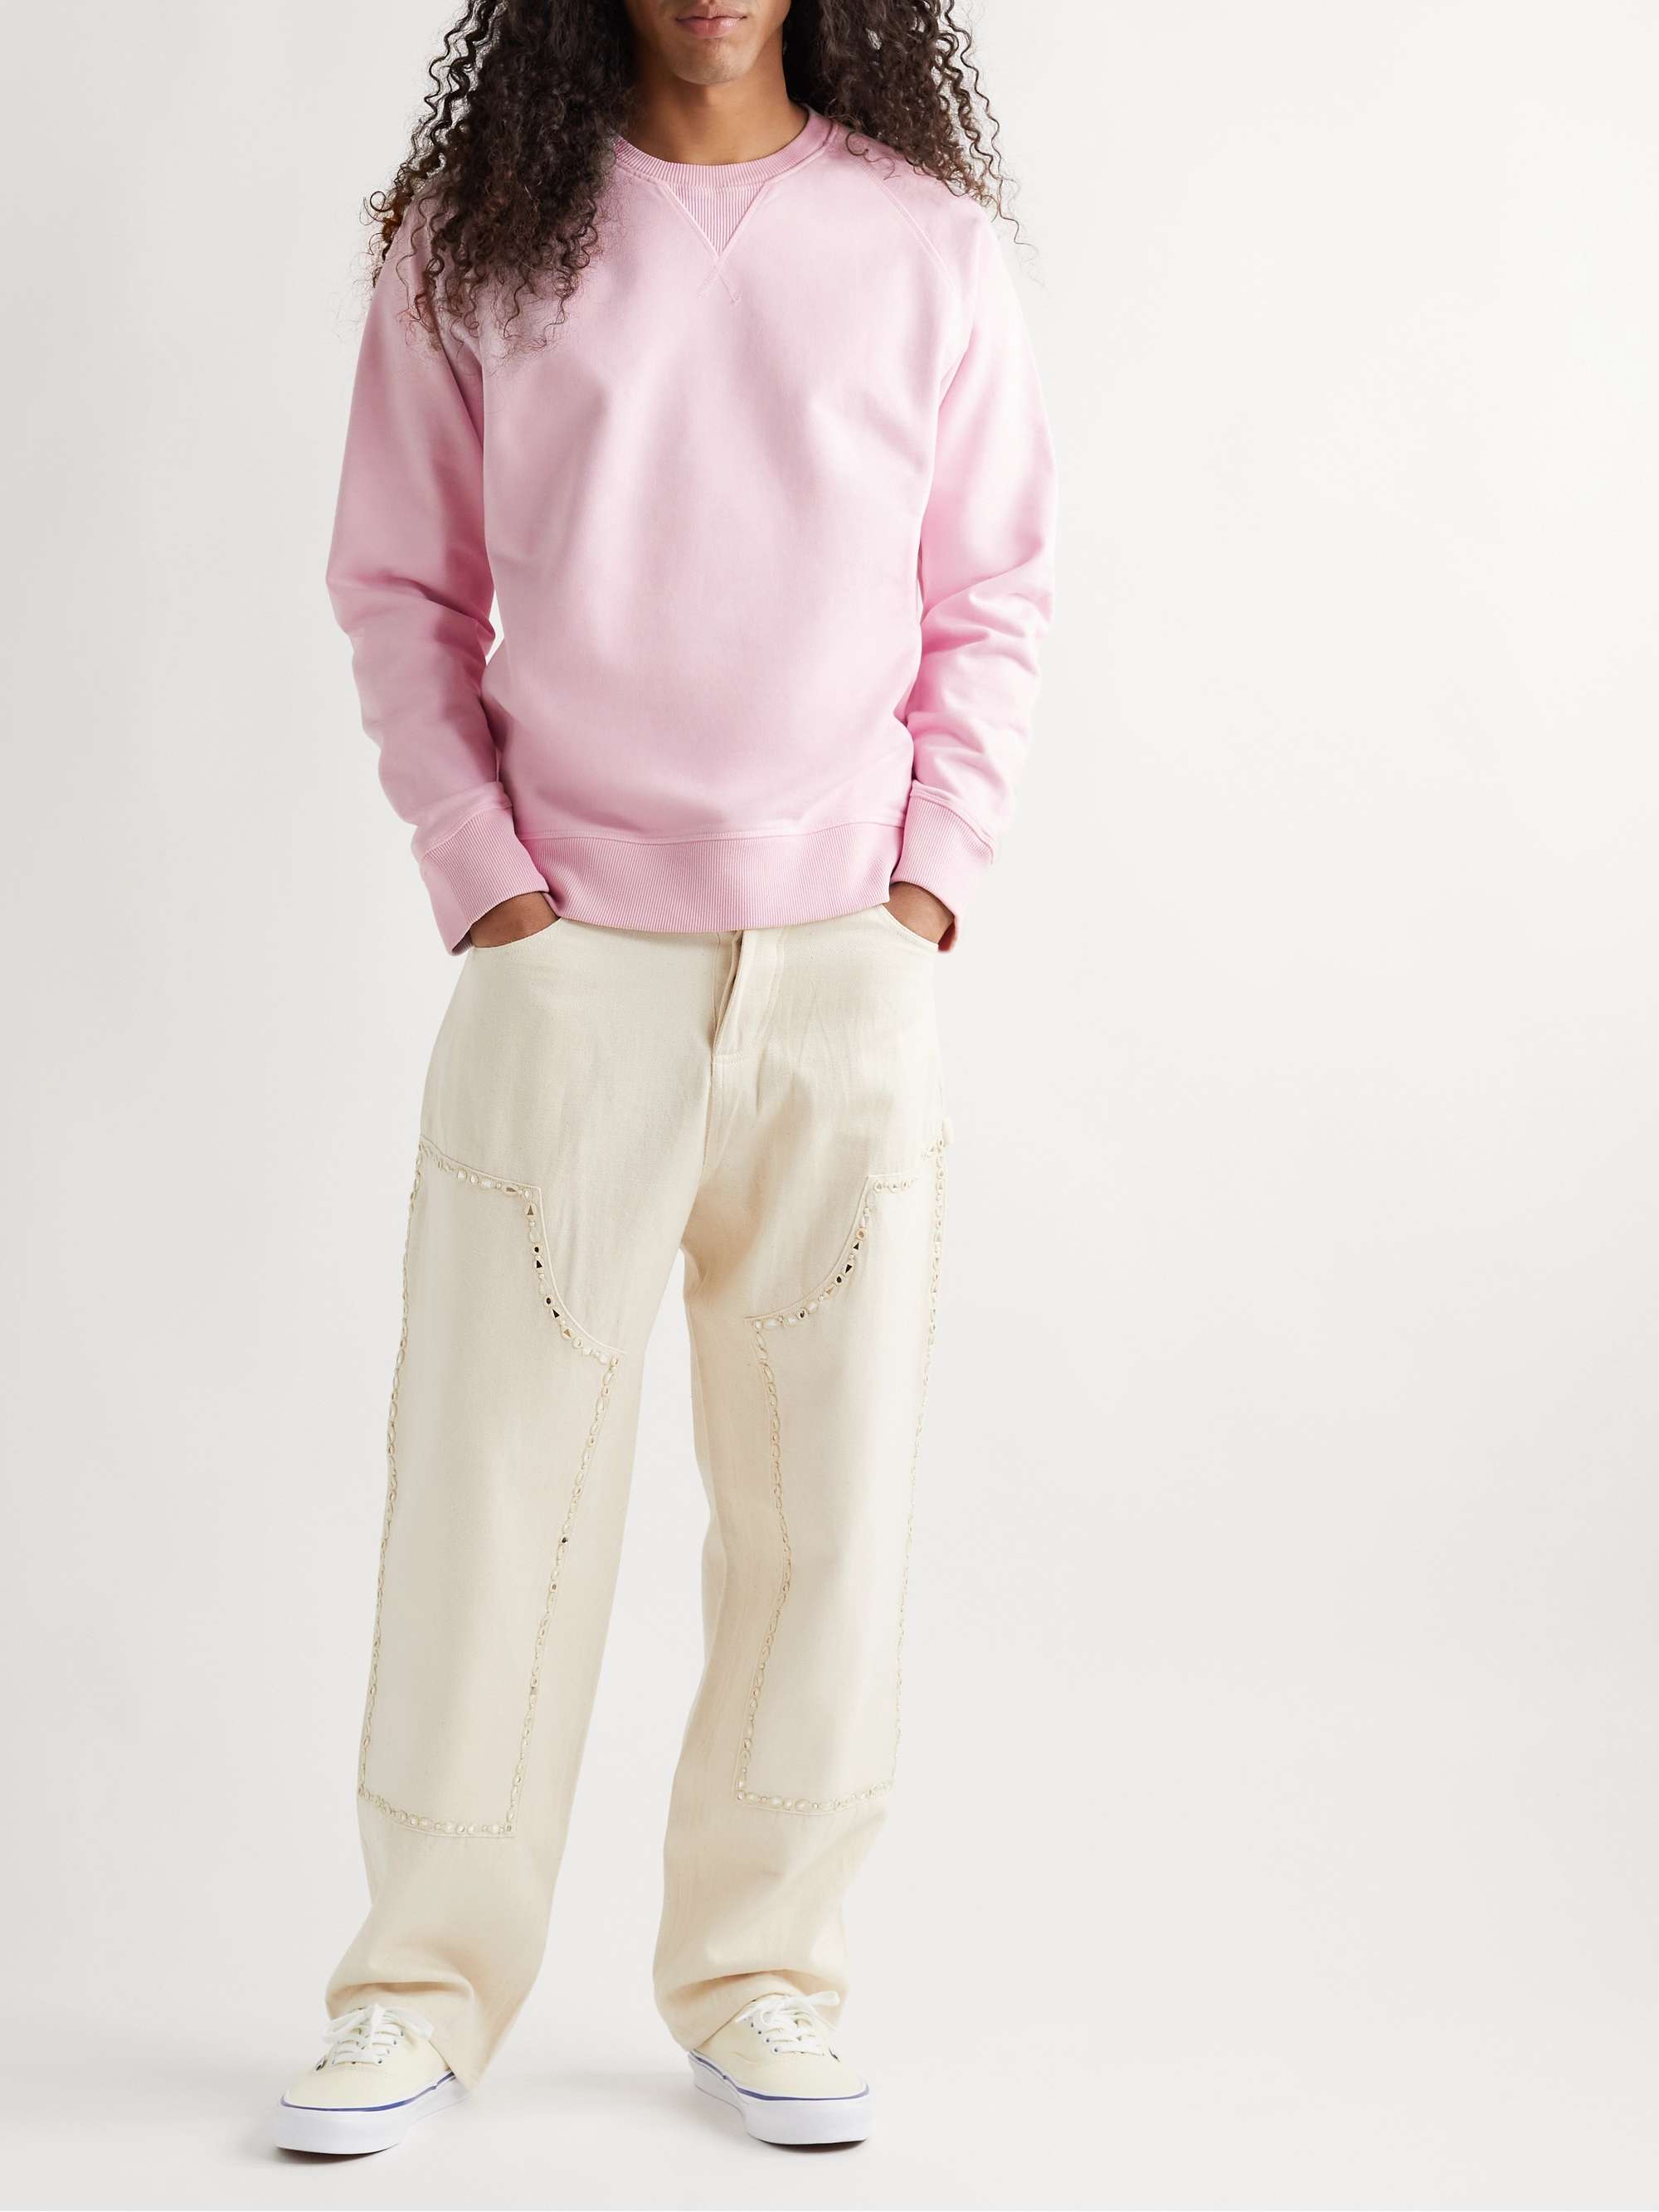 ORLEBAR BROWN Watkins Garment-Dyed Cotton-Jersey Sweatshirt